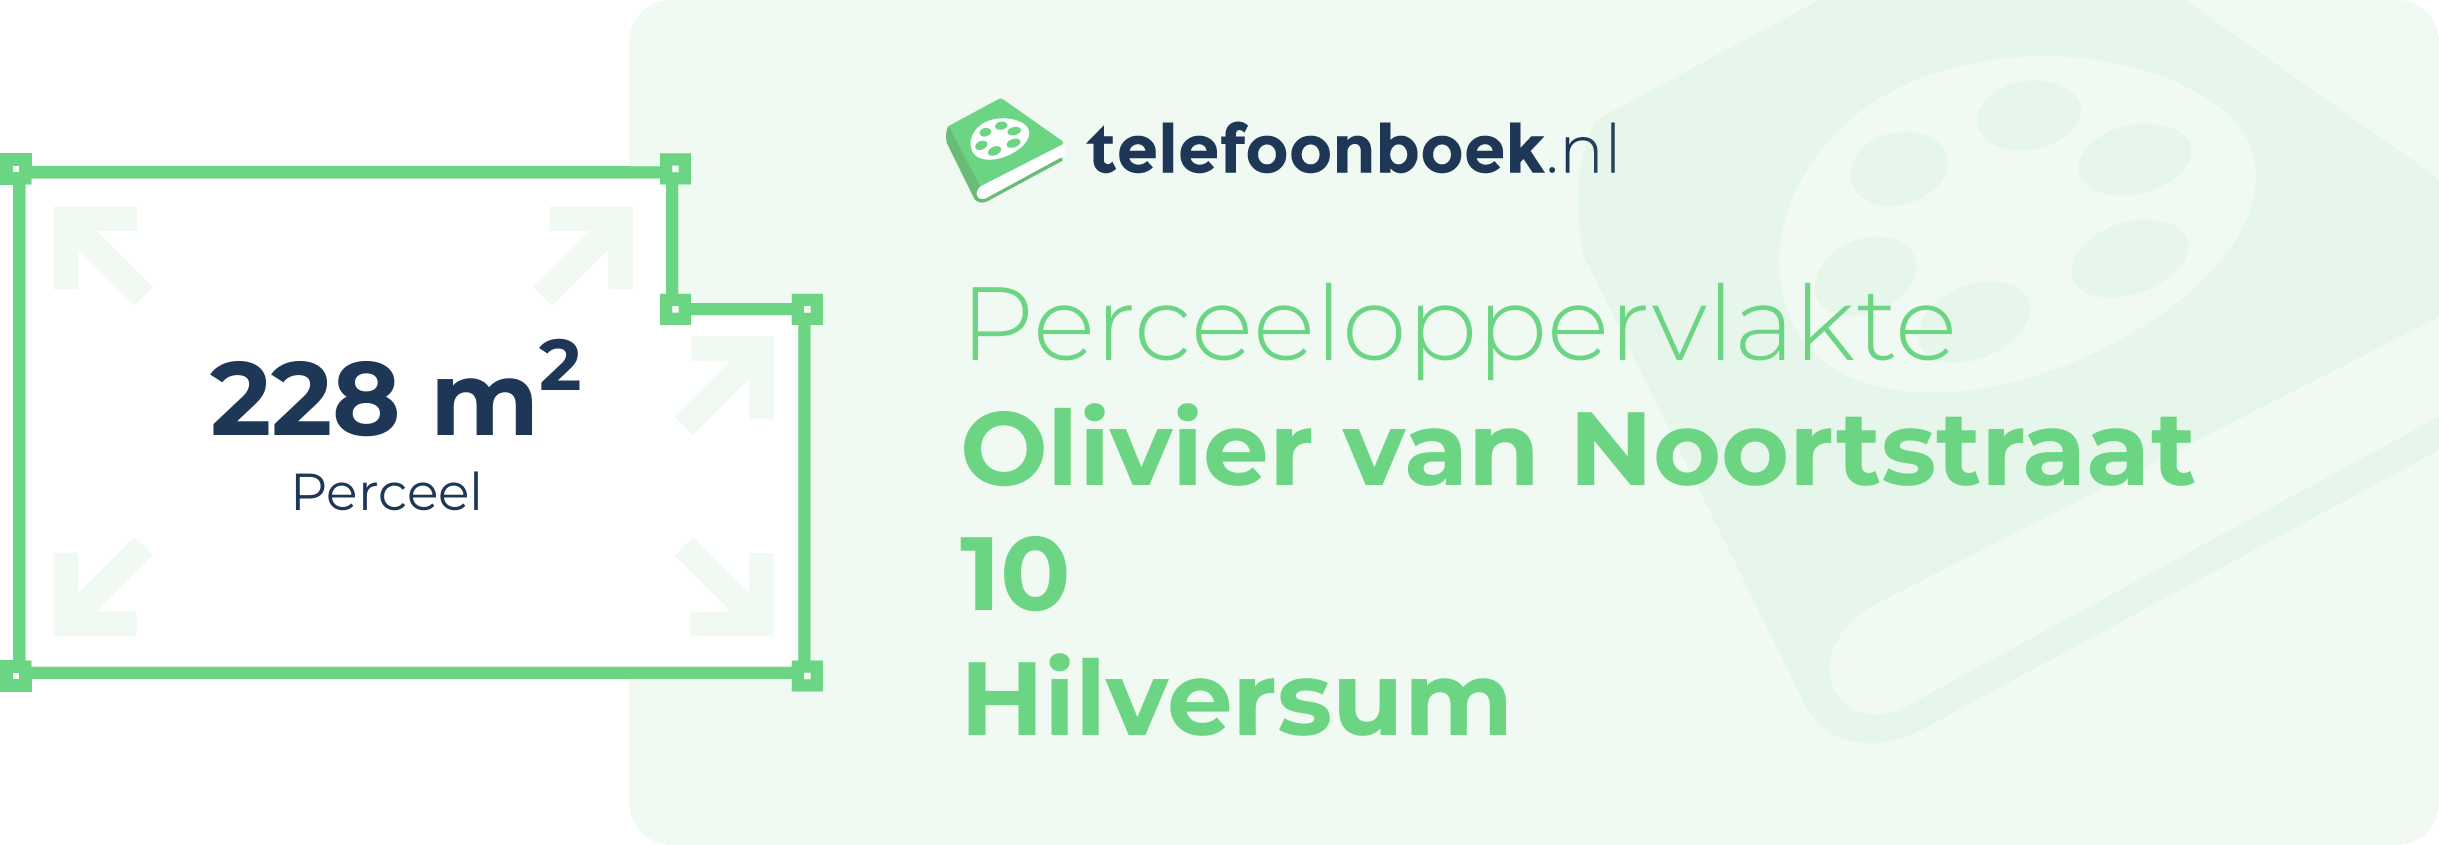 Perceeloppervlakte Olivier Van Noortstraat 10 Hilversum